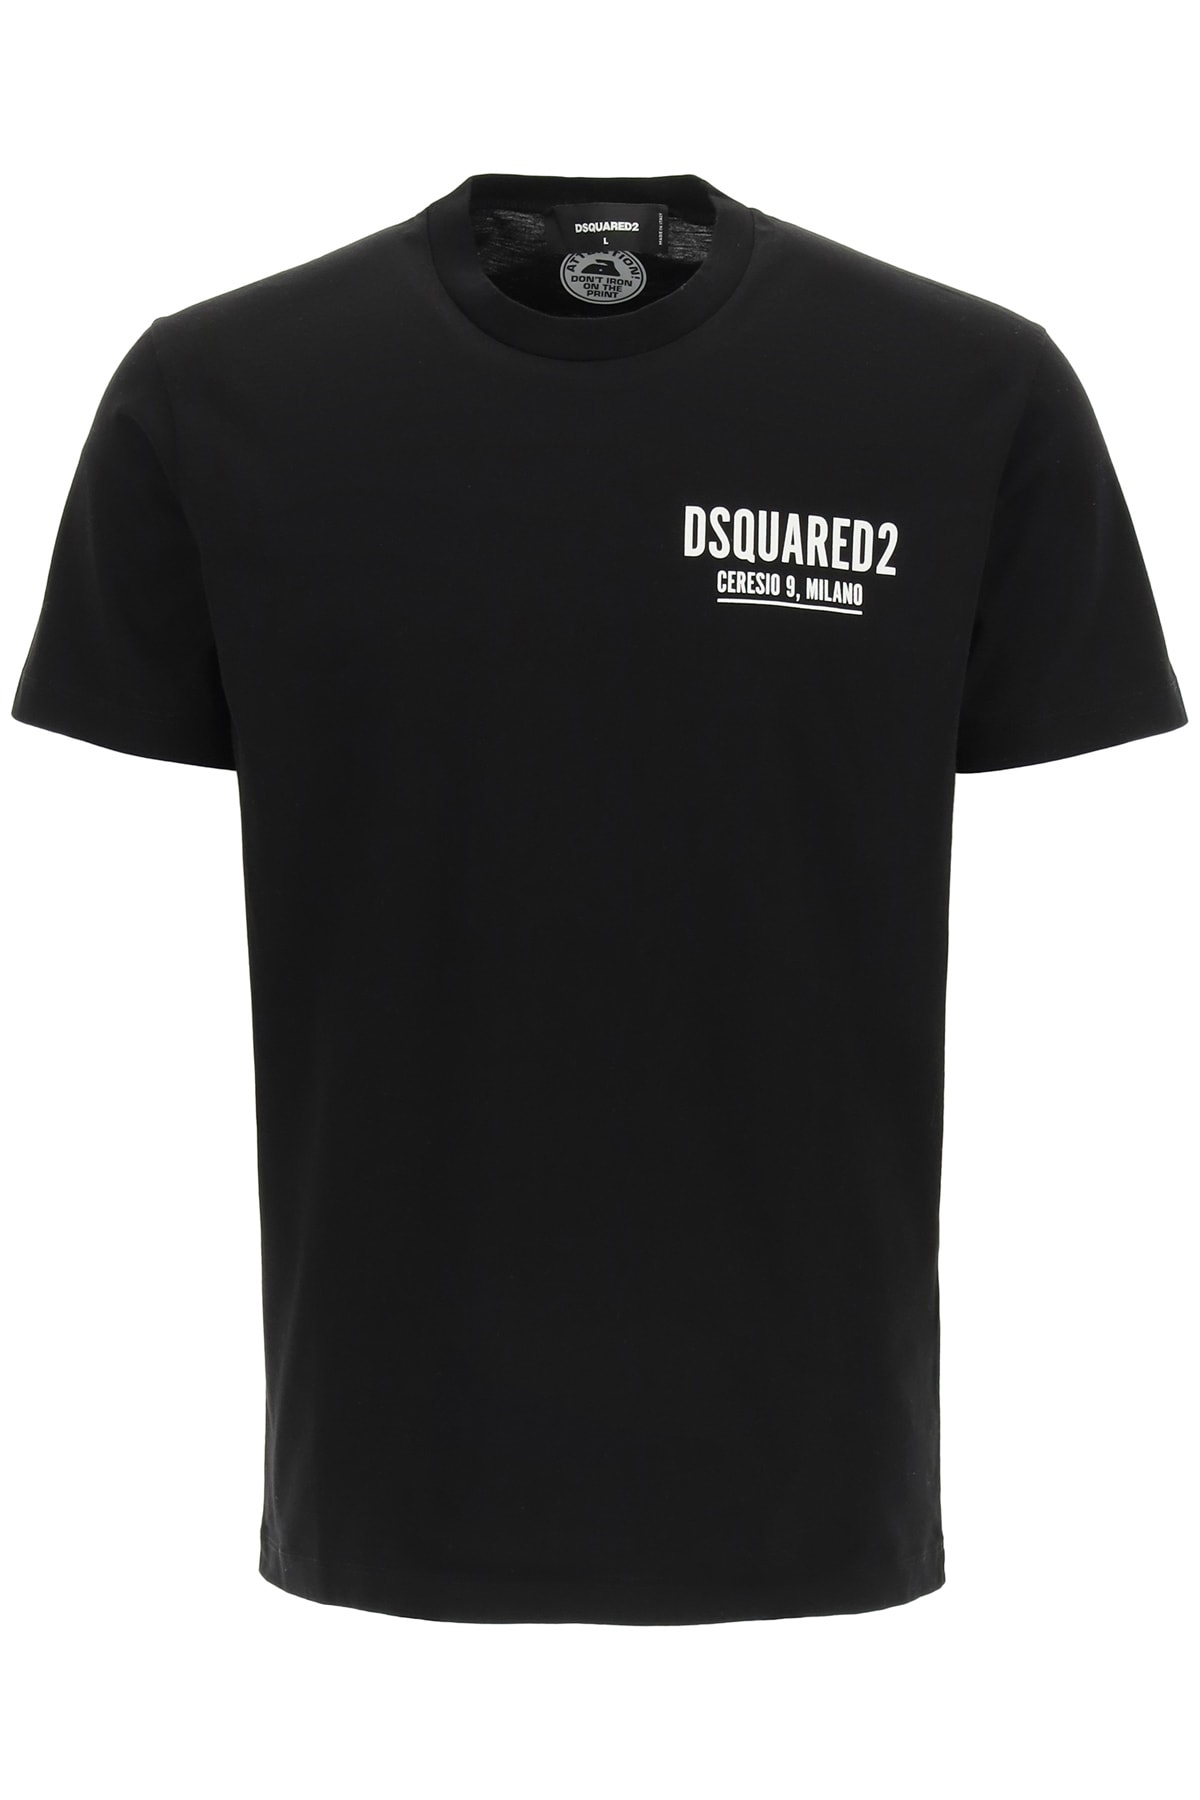 Dsquared2 Ceresio 9 T-shirt